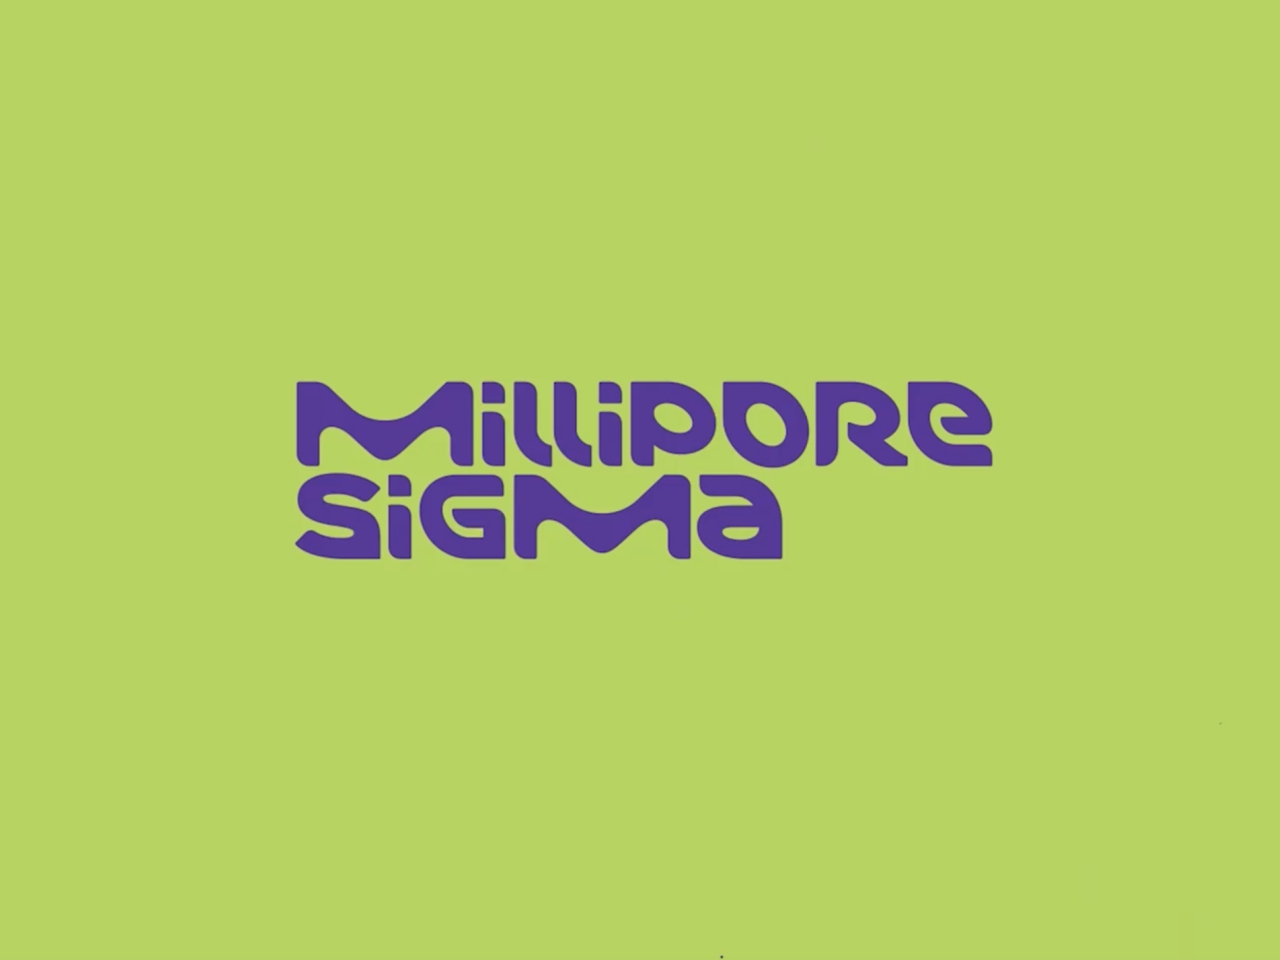 MilliporeSigma Logo is in purple over a bright green background